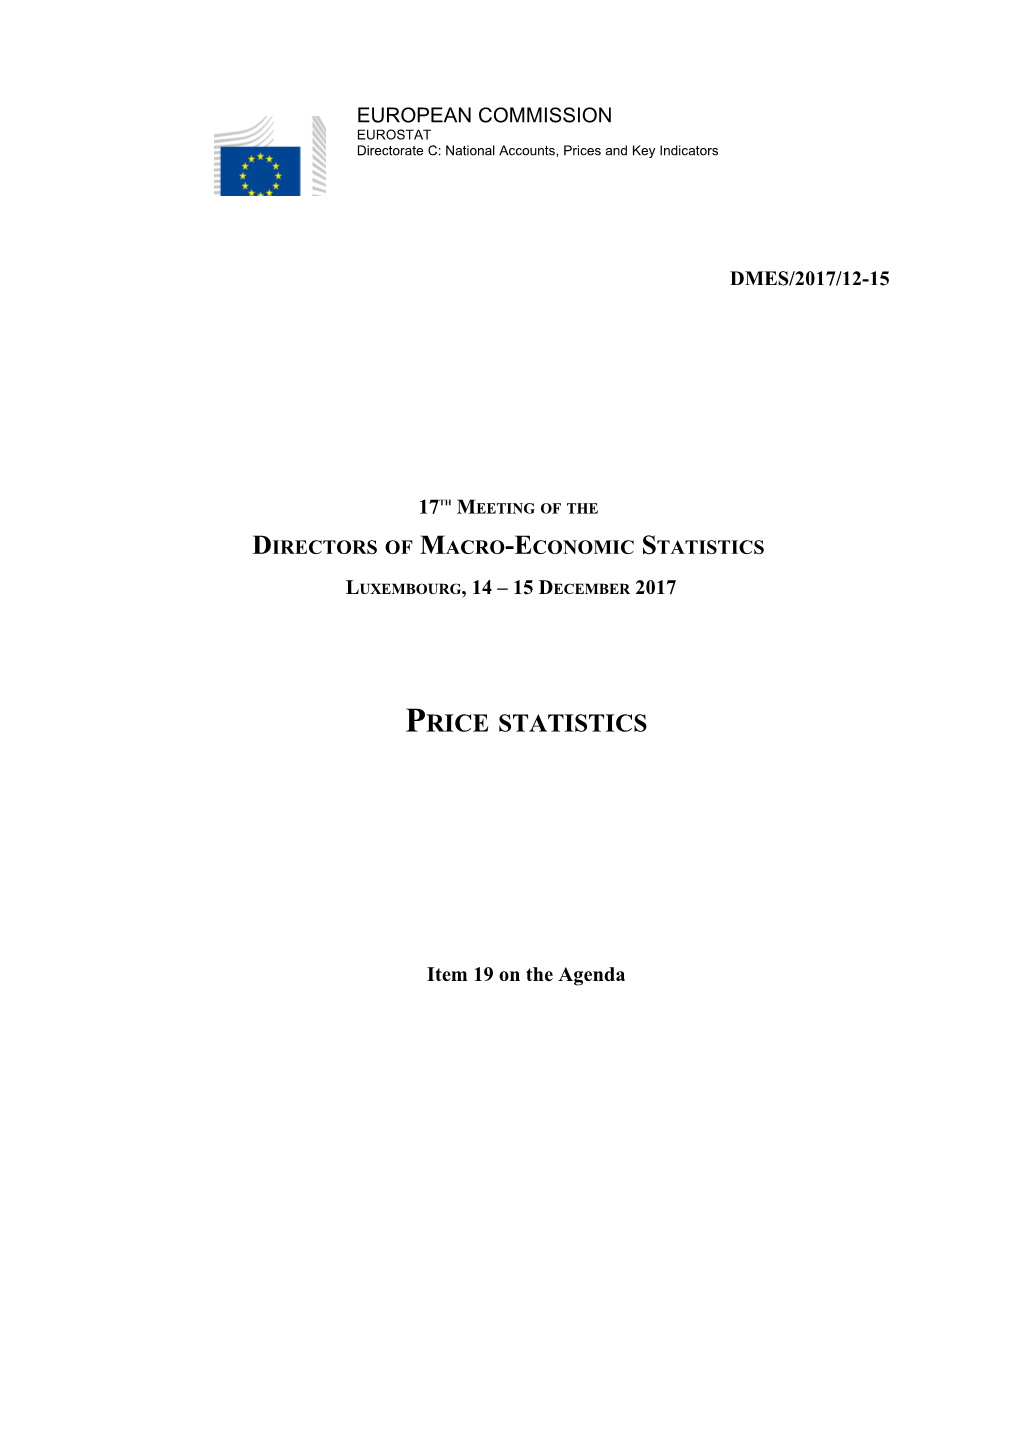 Directors of Macro-Economic Statistics